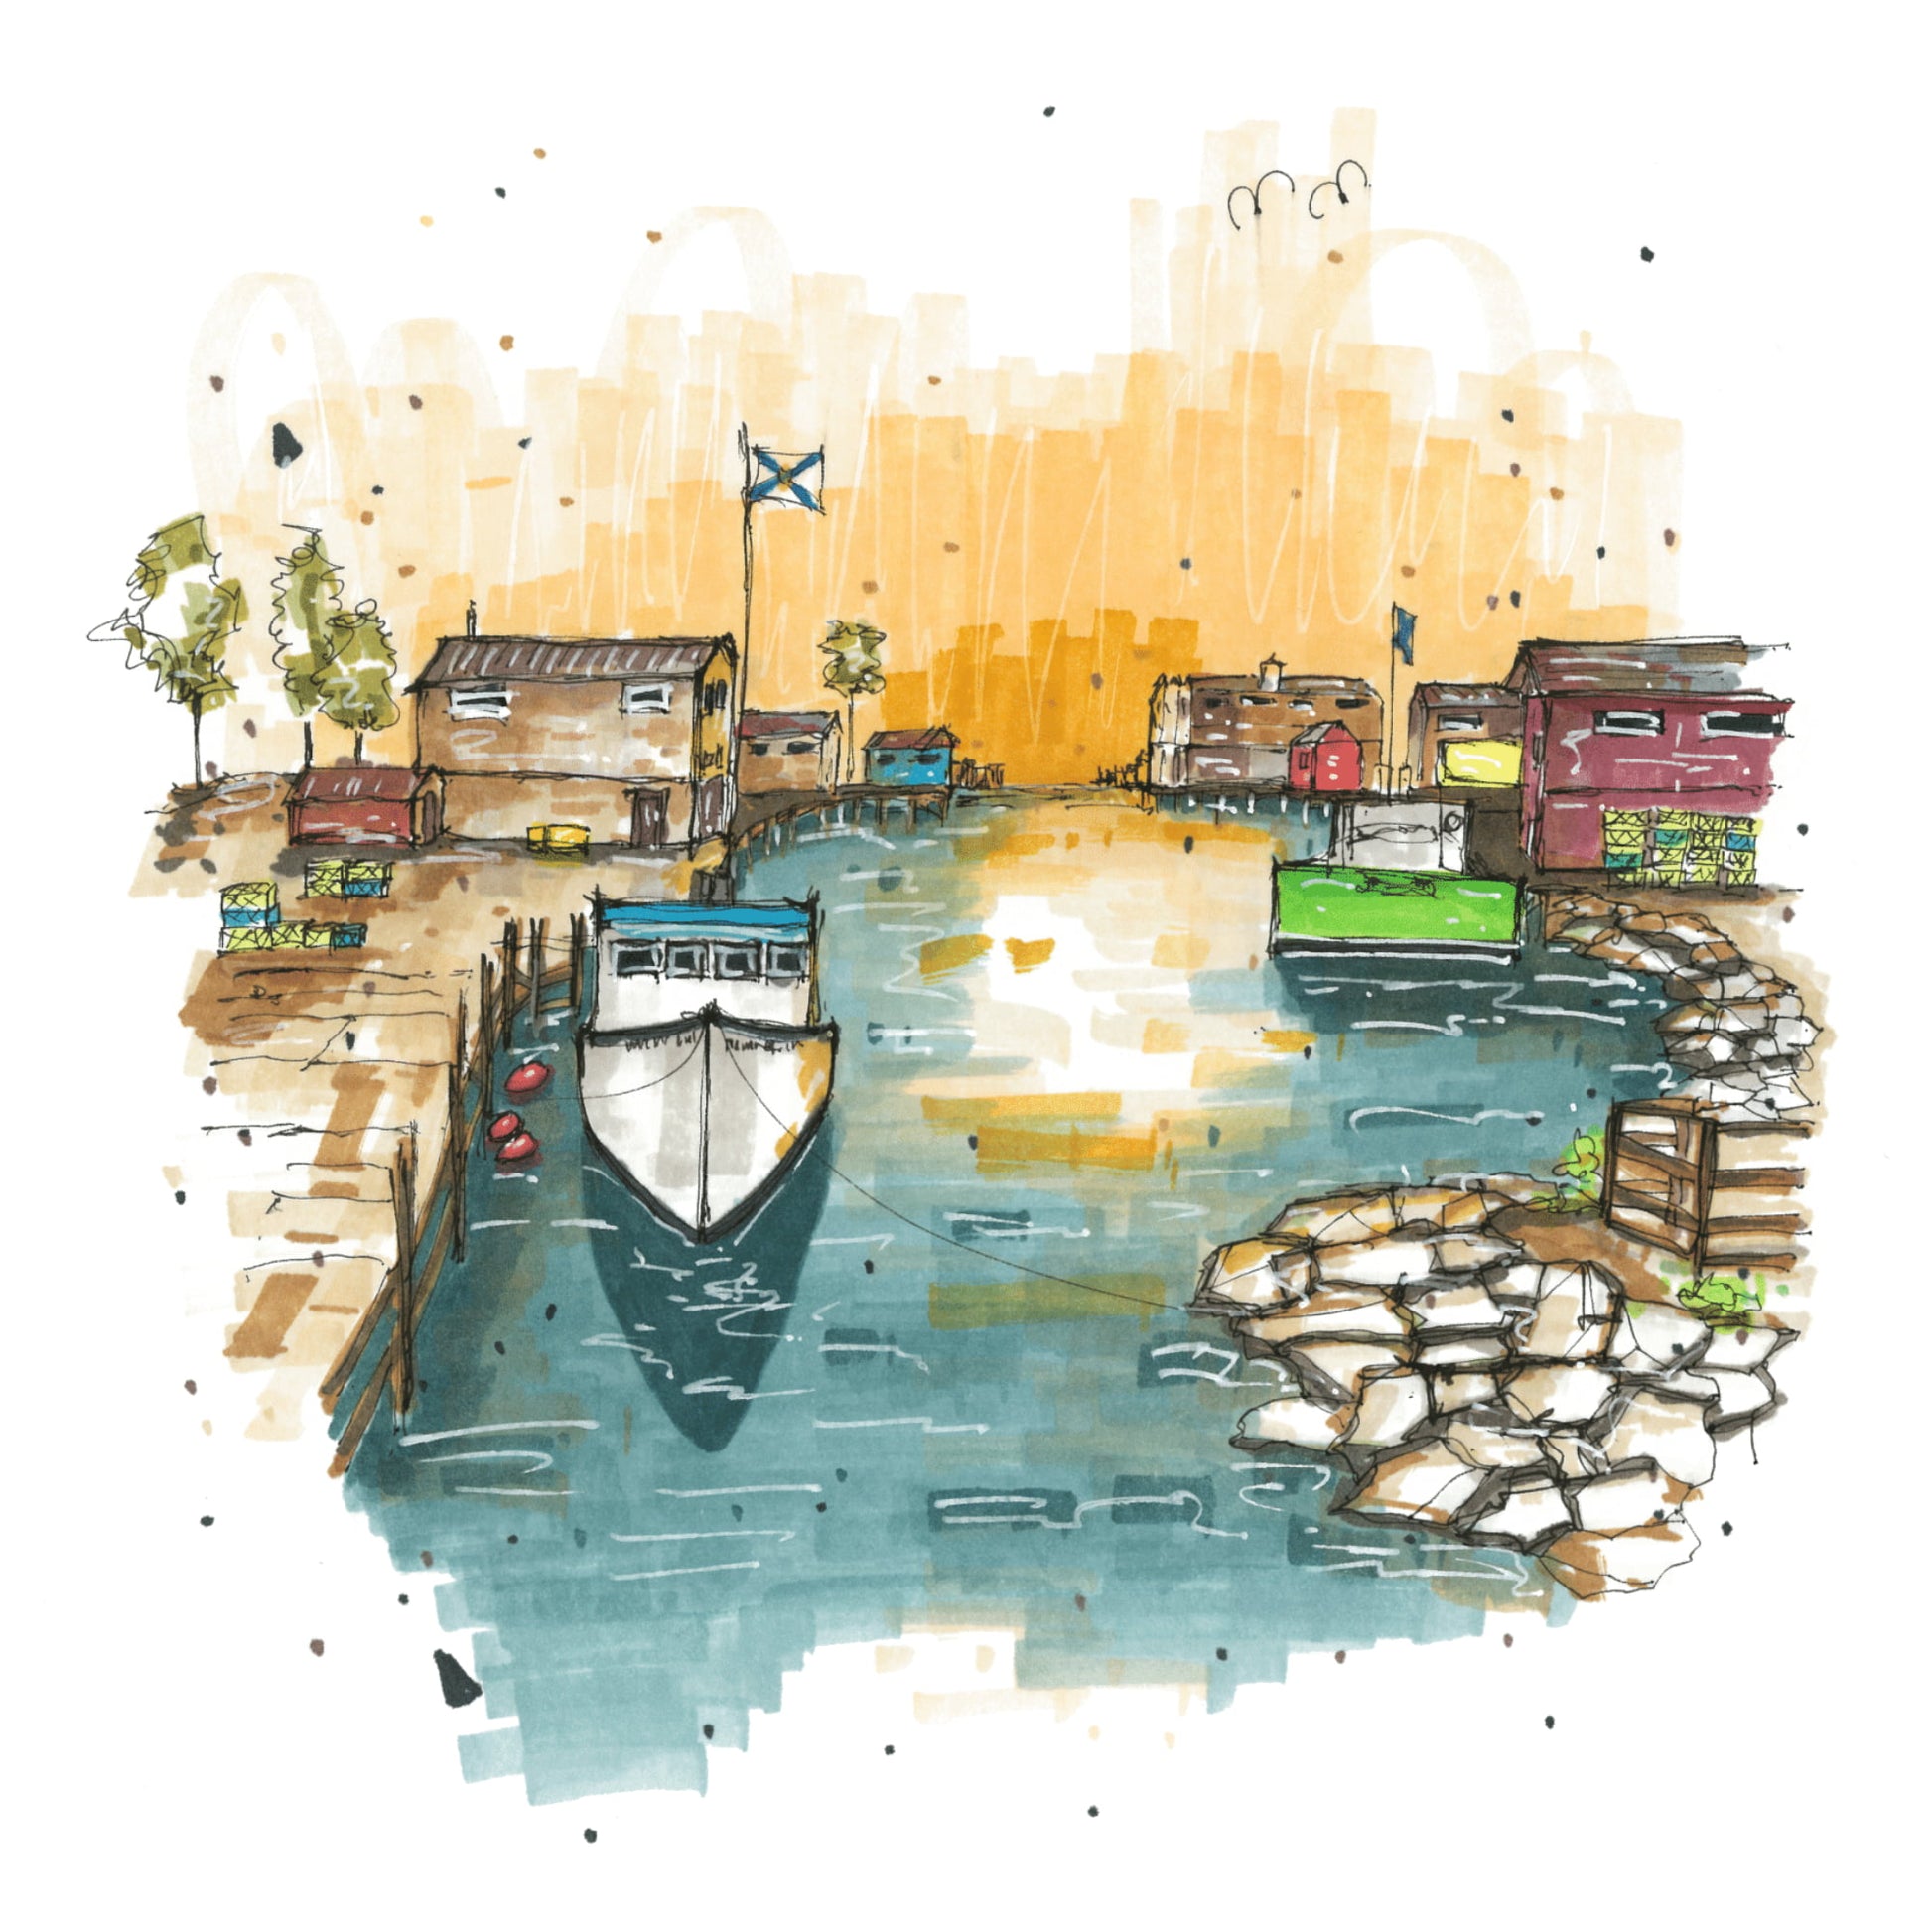 Fishermans Cove Fishing Boat, Fishermans Cove, Nova Scotia, Print, Downtownsketcher, Wynand van Niekerk, DTS0055